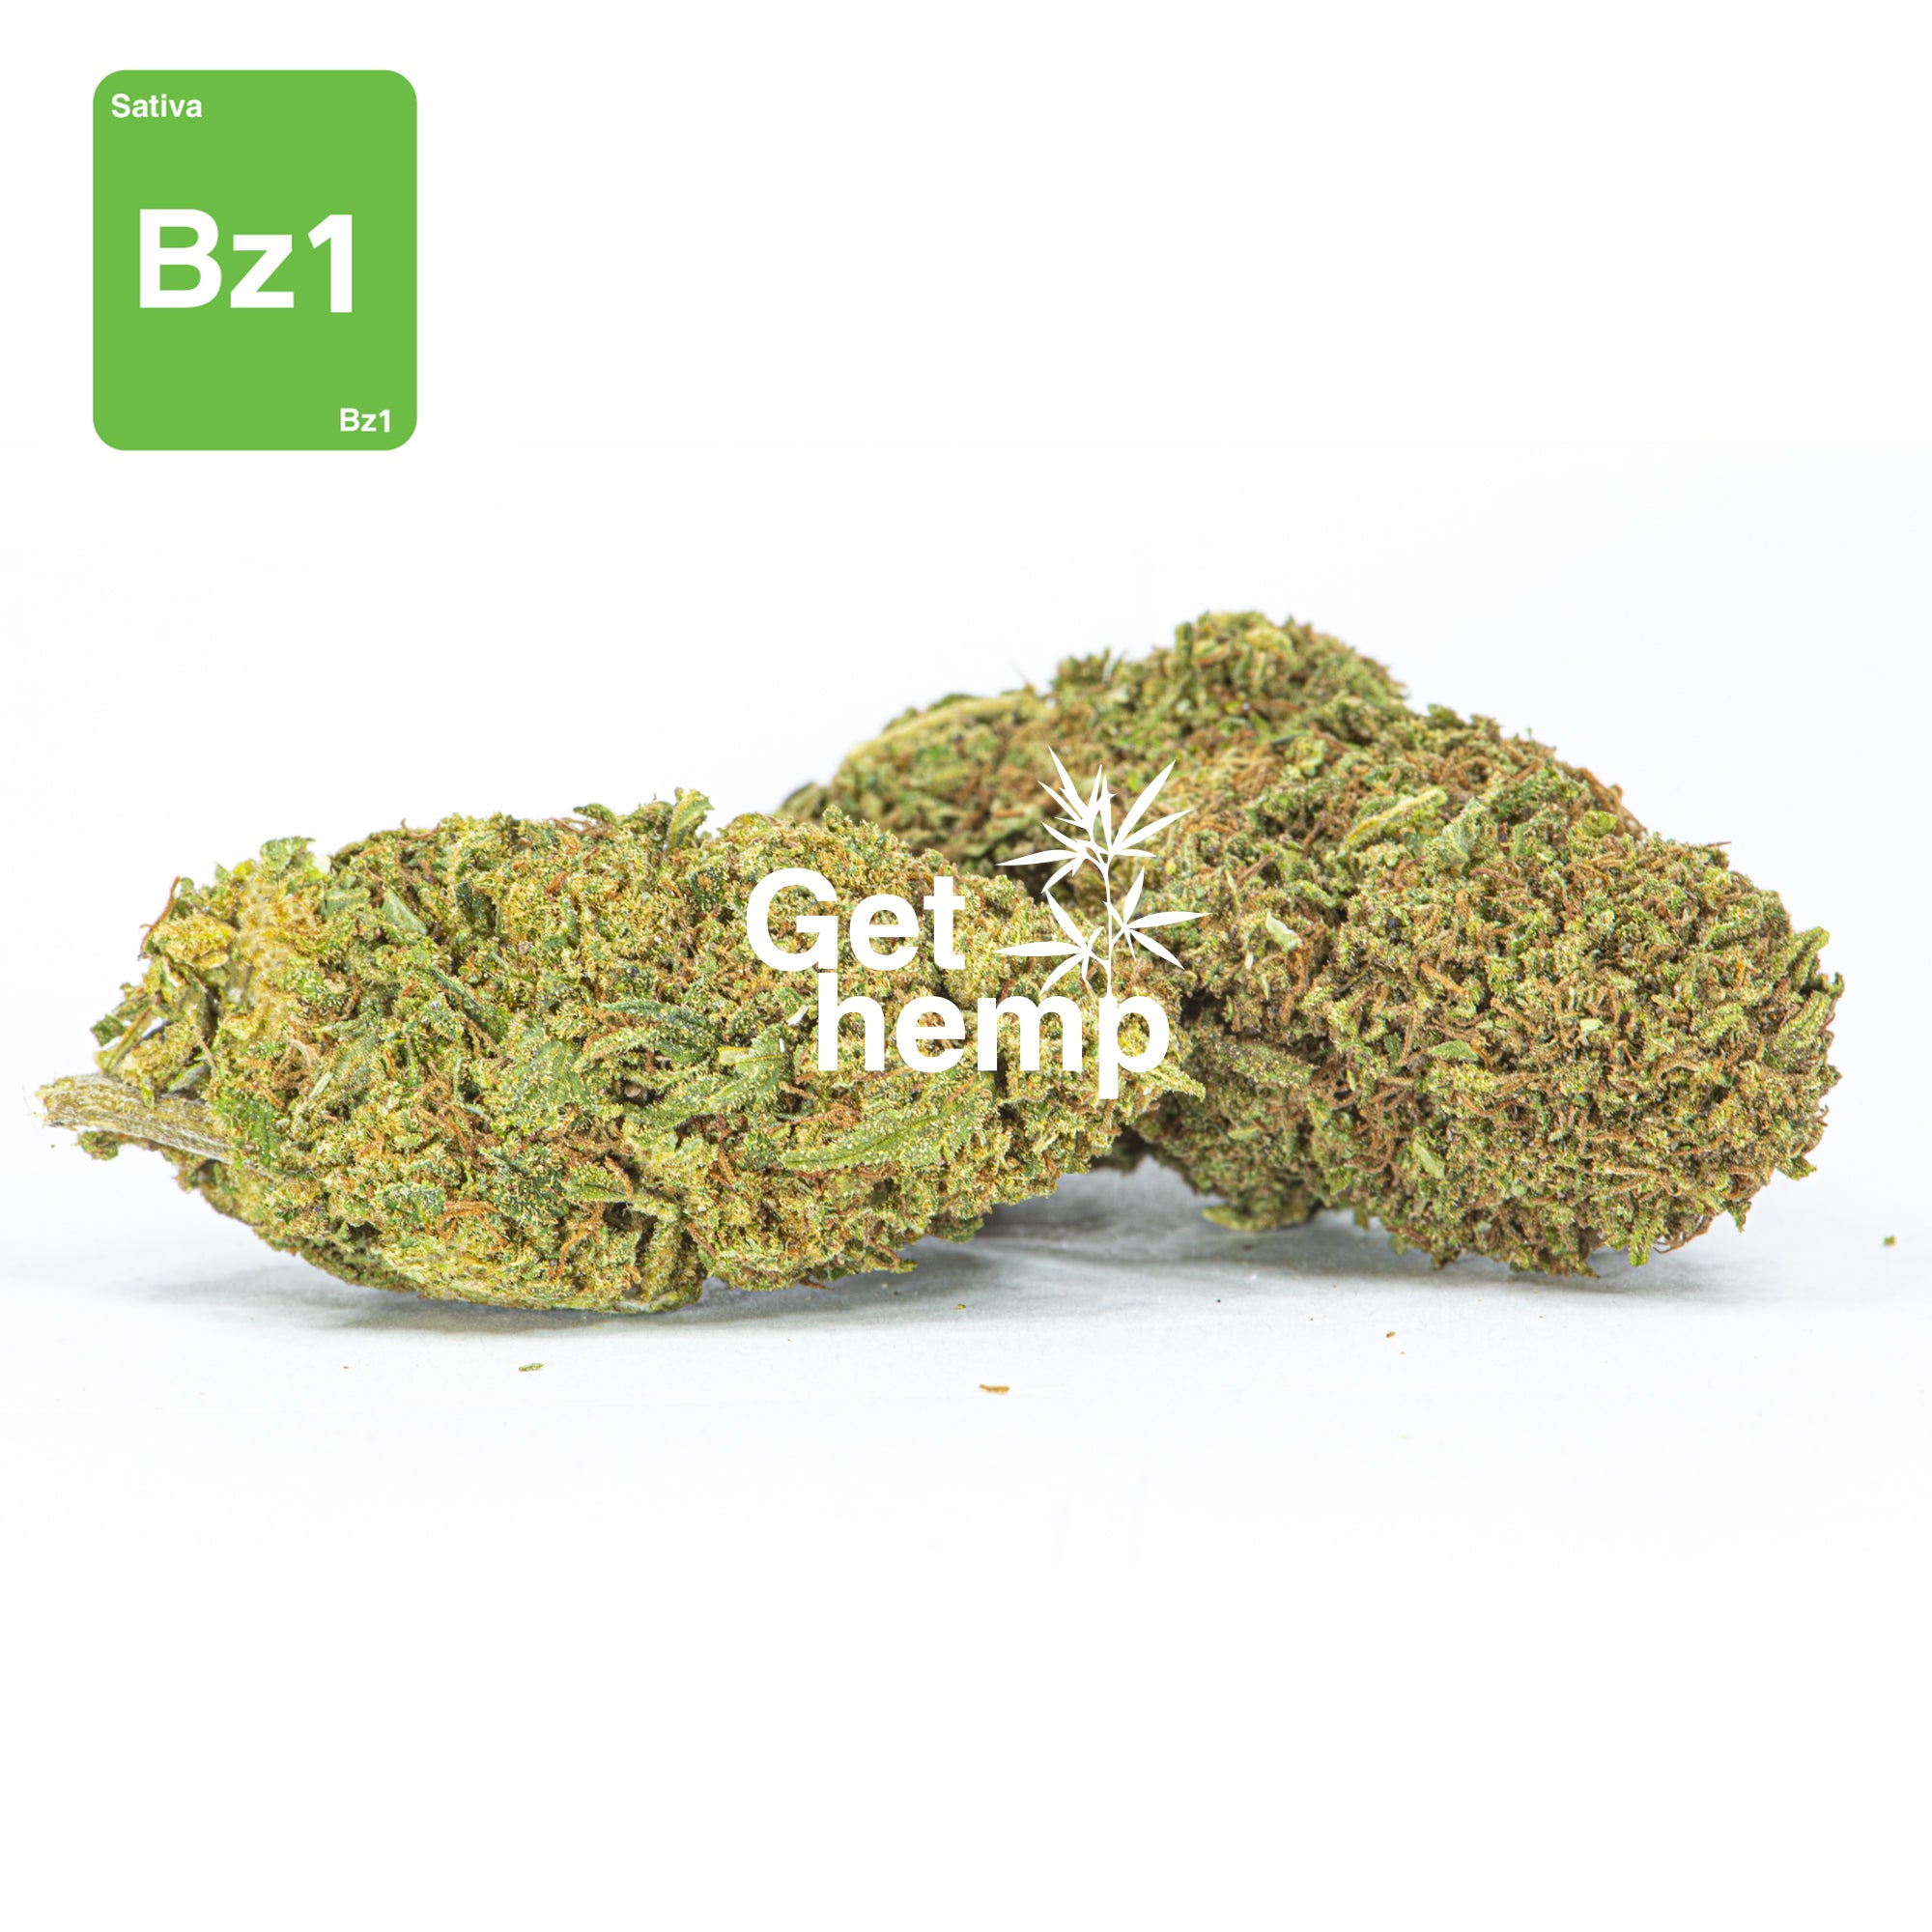 "Bz1" CBD Hemp Flowers (CBD 30% Max) - Gethemp